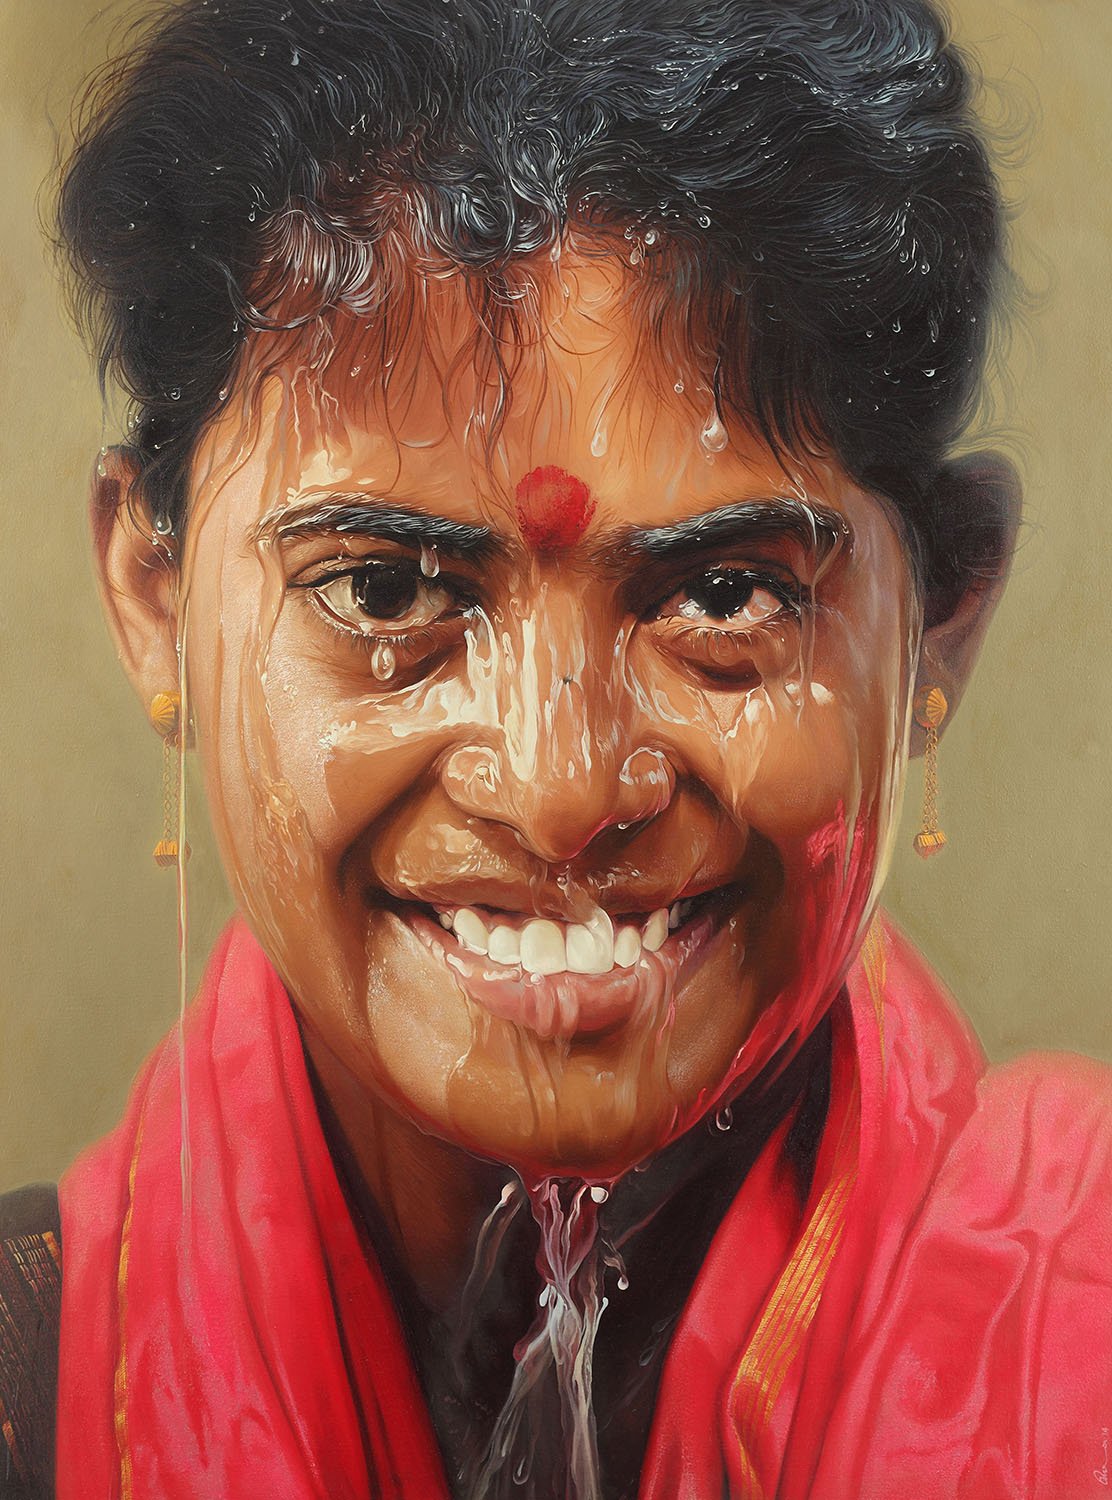 Bliss 5|B. Venkatesan- Oil on Canvas, 2014, 48 x 36 inches